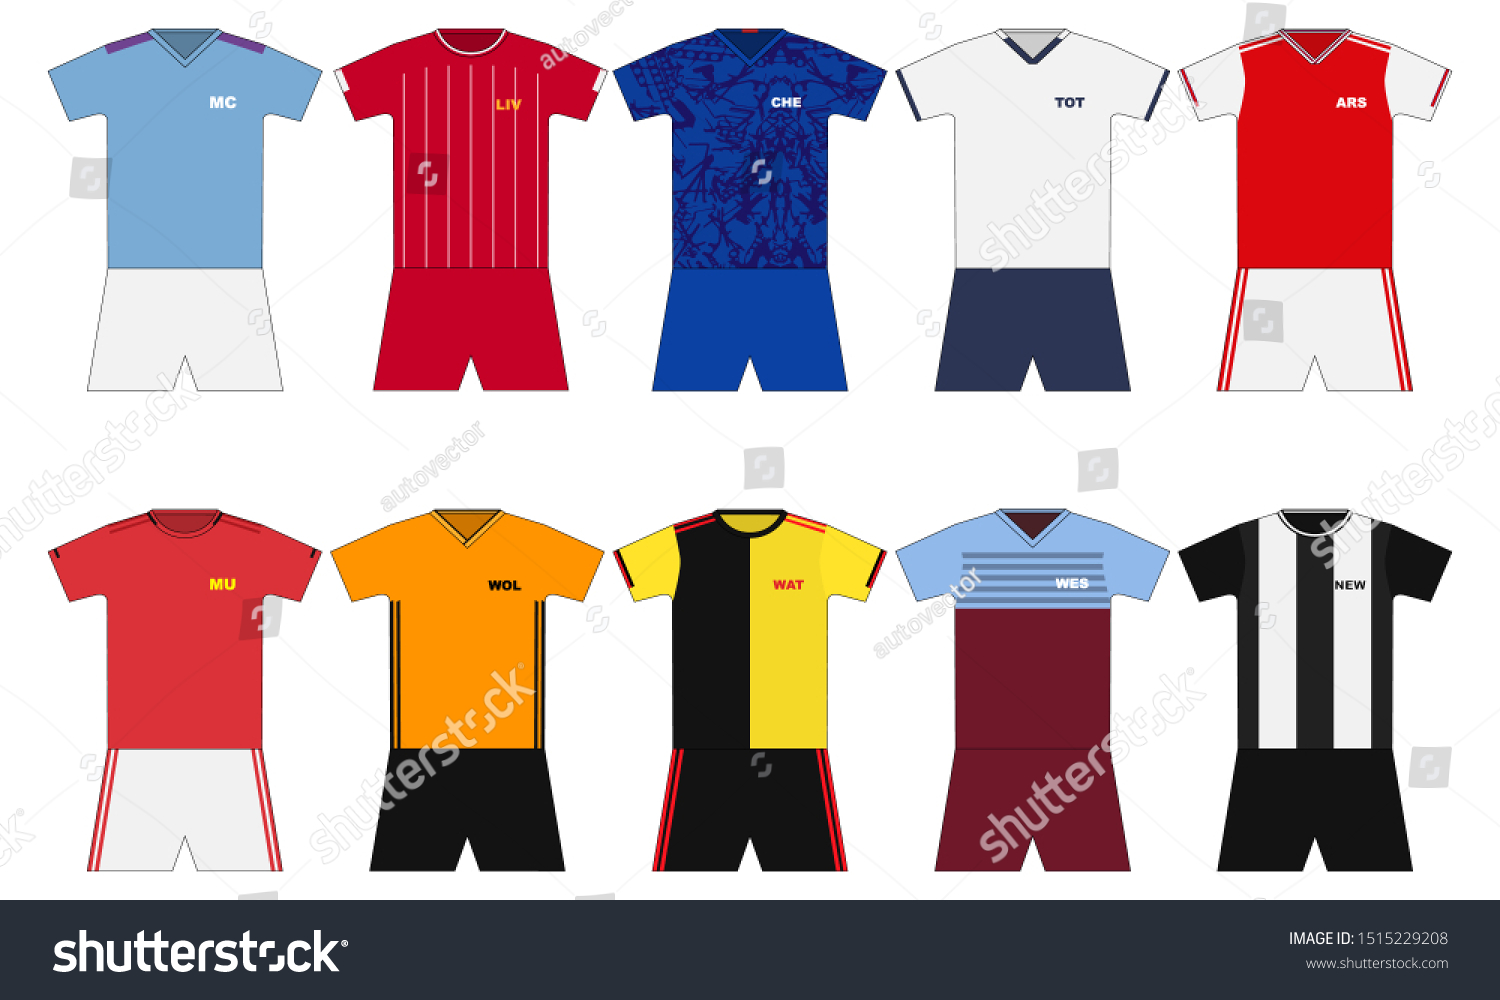 English Premier League kits 2018 - 2019, football or soccer jerseys icons  set from England 18/19 kits Stock Vector